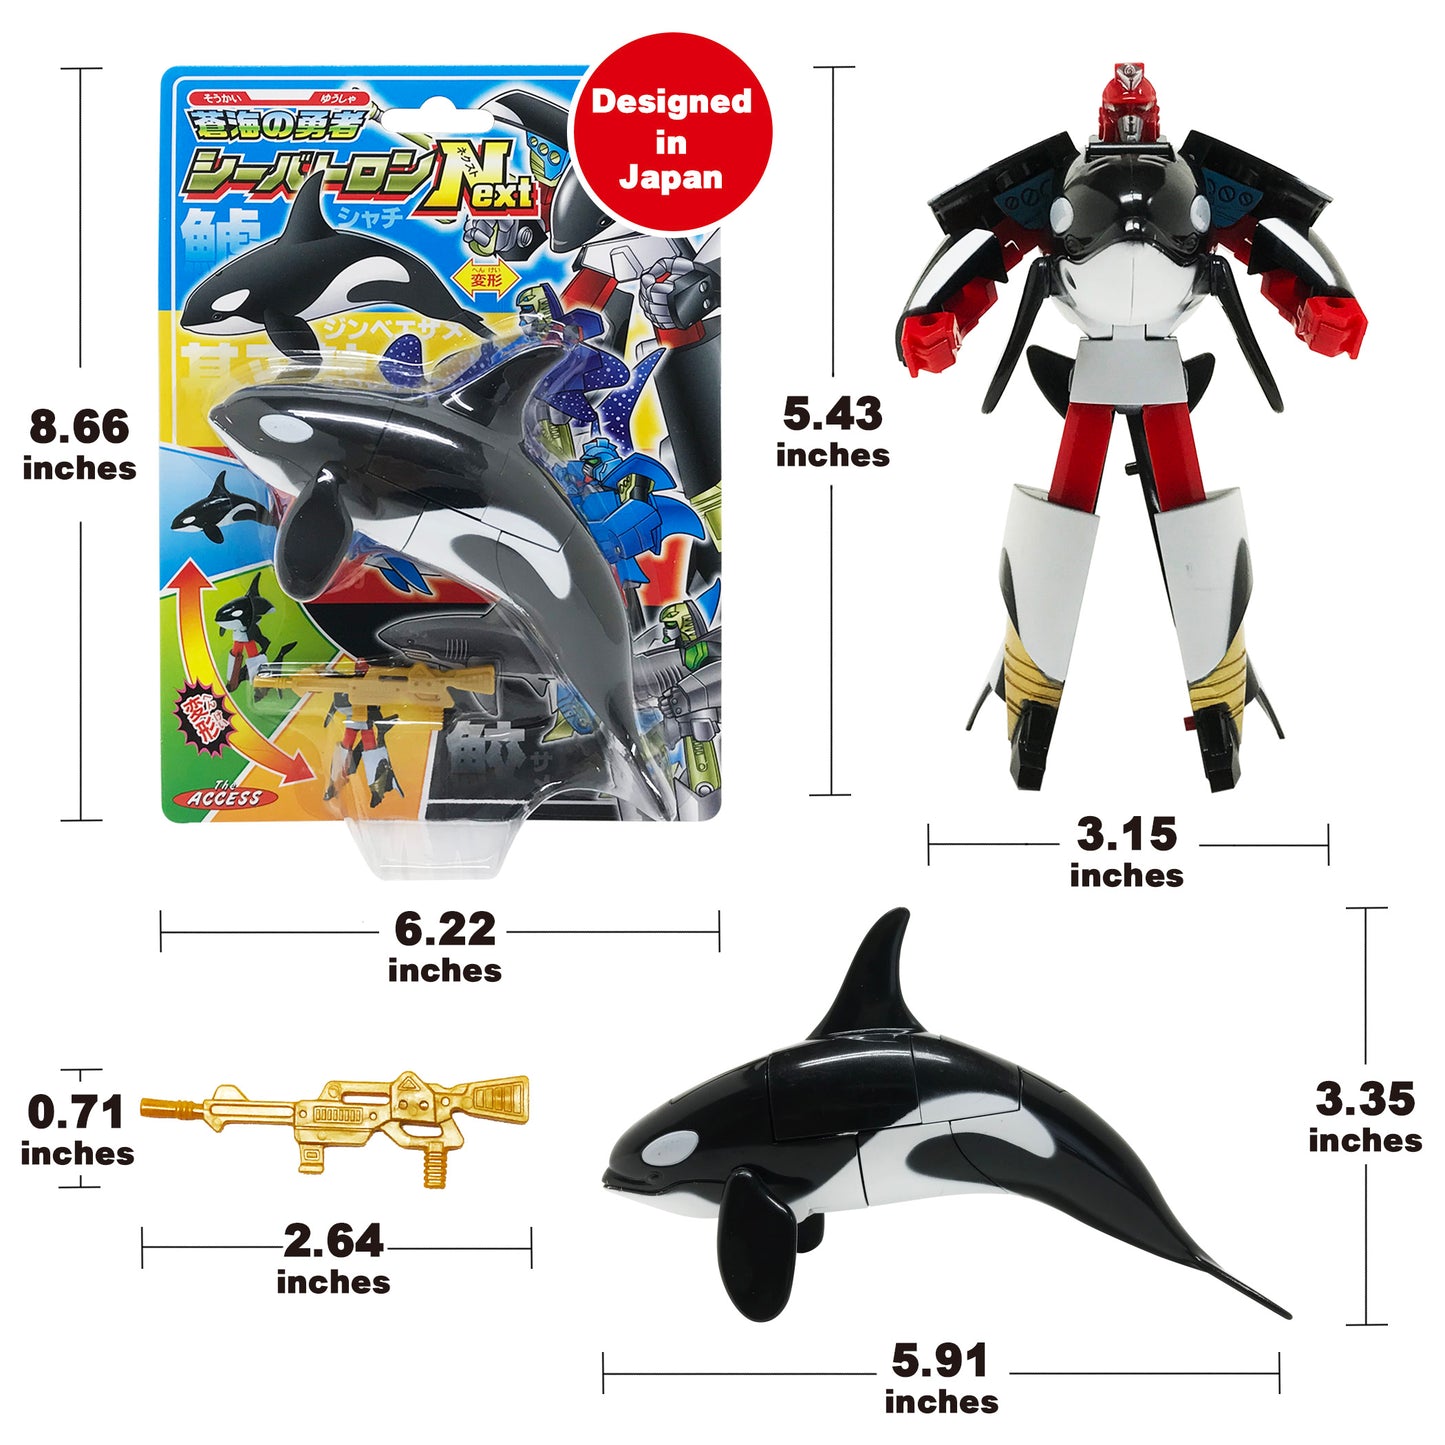 Size of Transform Robot Killer Whale Figurine Animal Toy